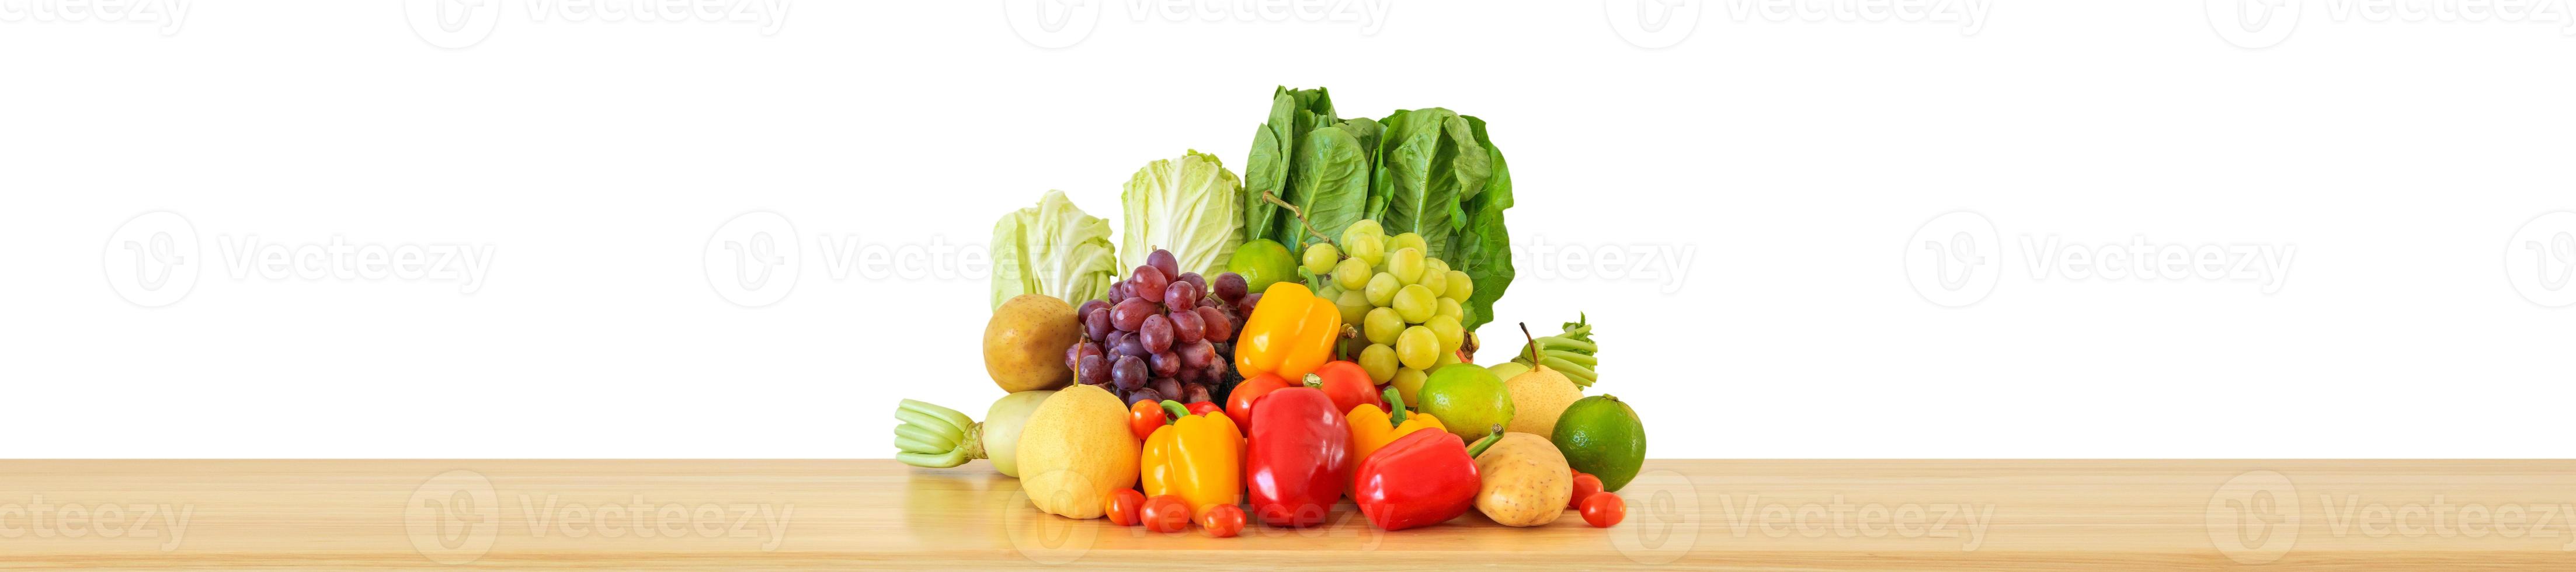 produto de mercearia de frutas e legumes frescos na mesa de madeira isolada no fundo branco foto